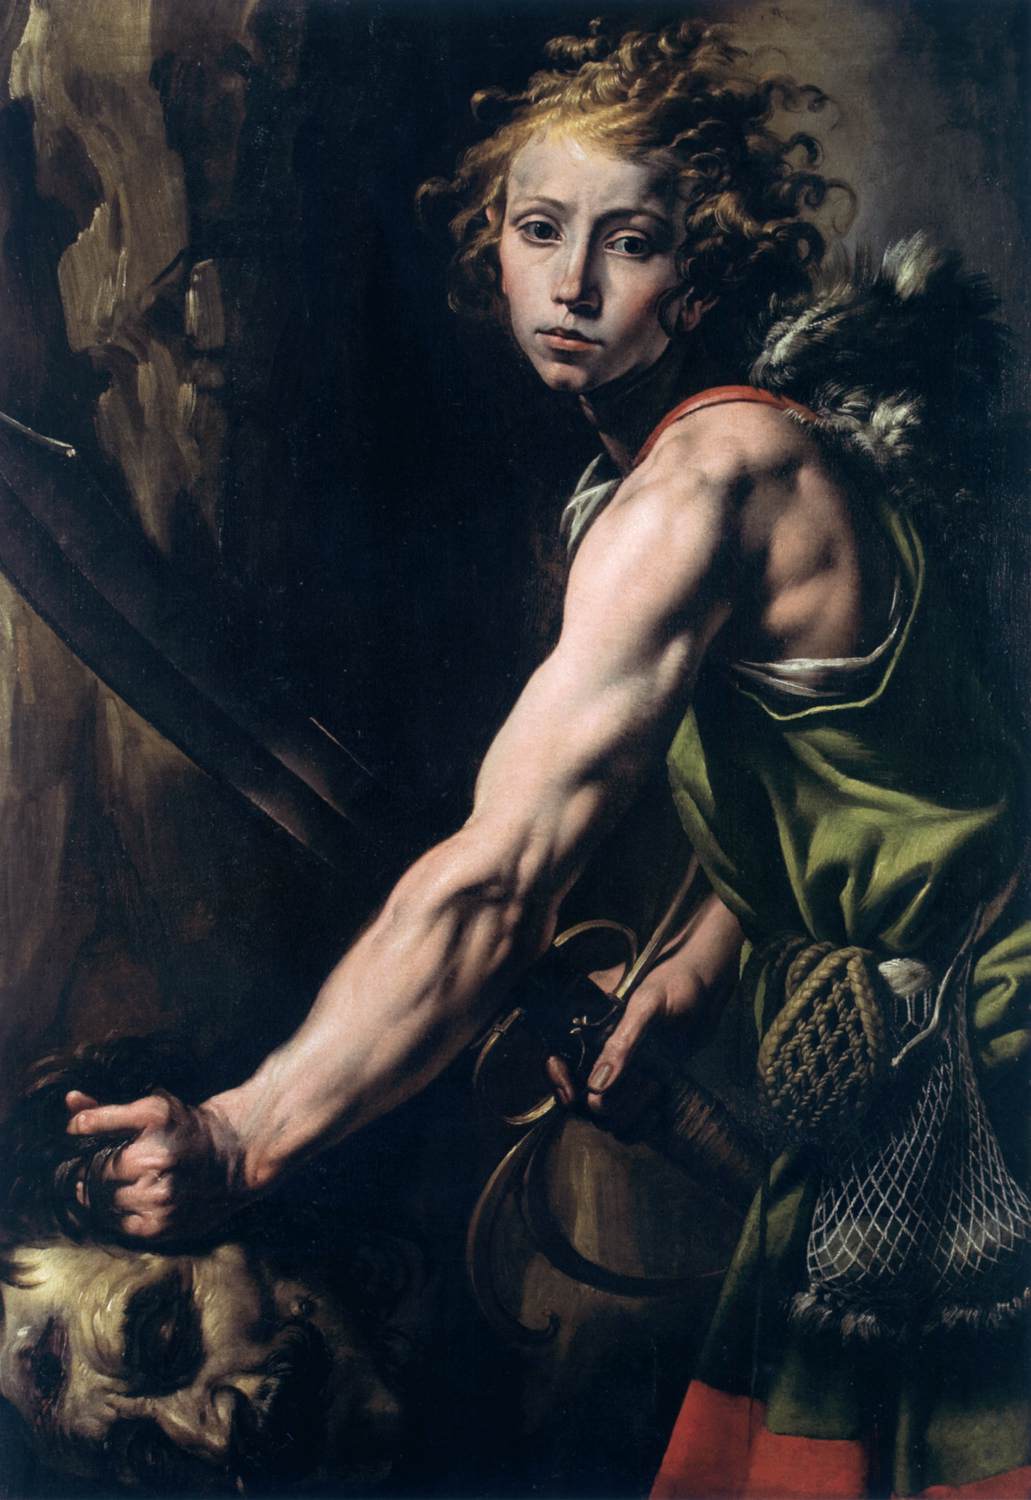 David with Goliath's Head